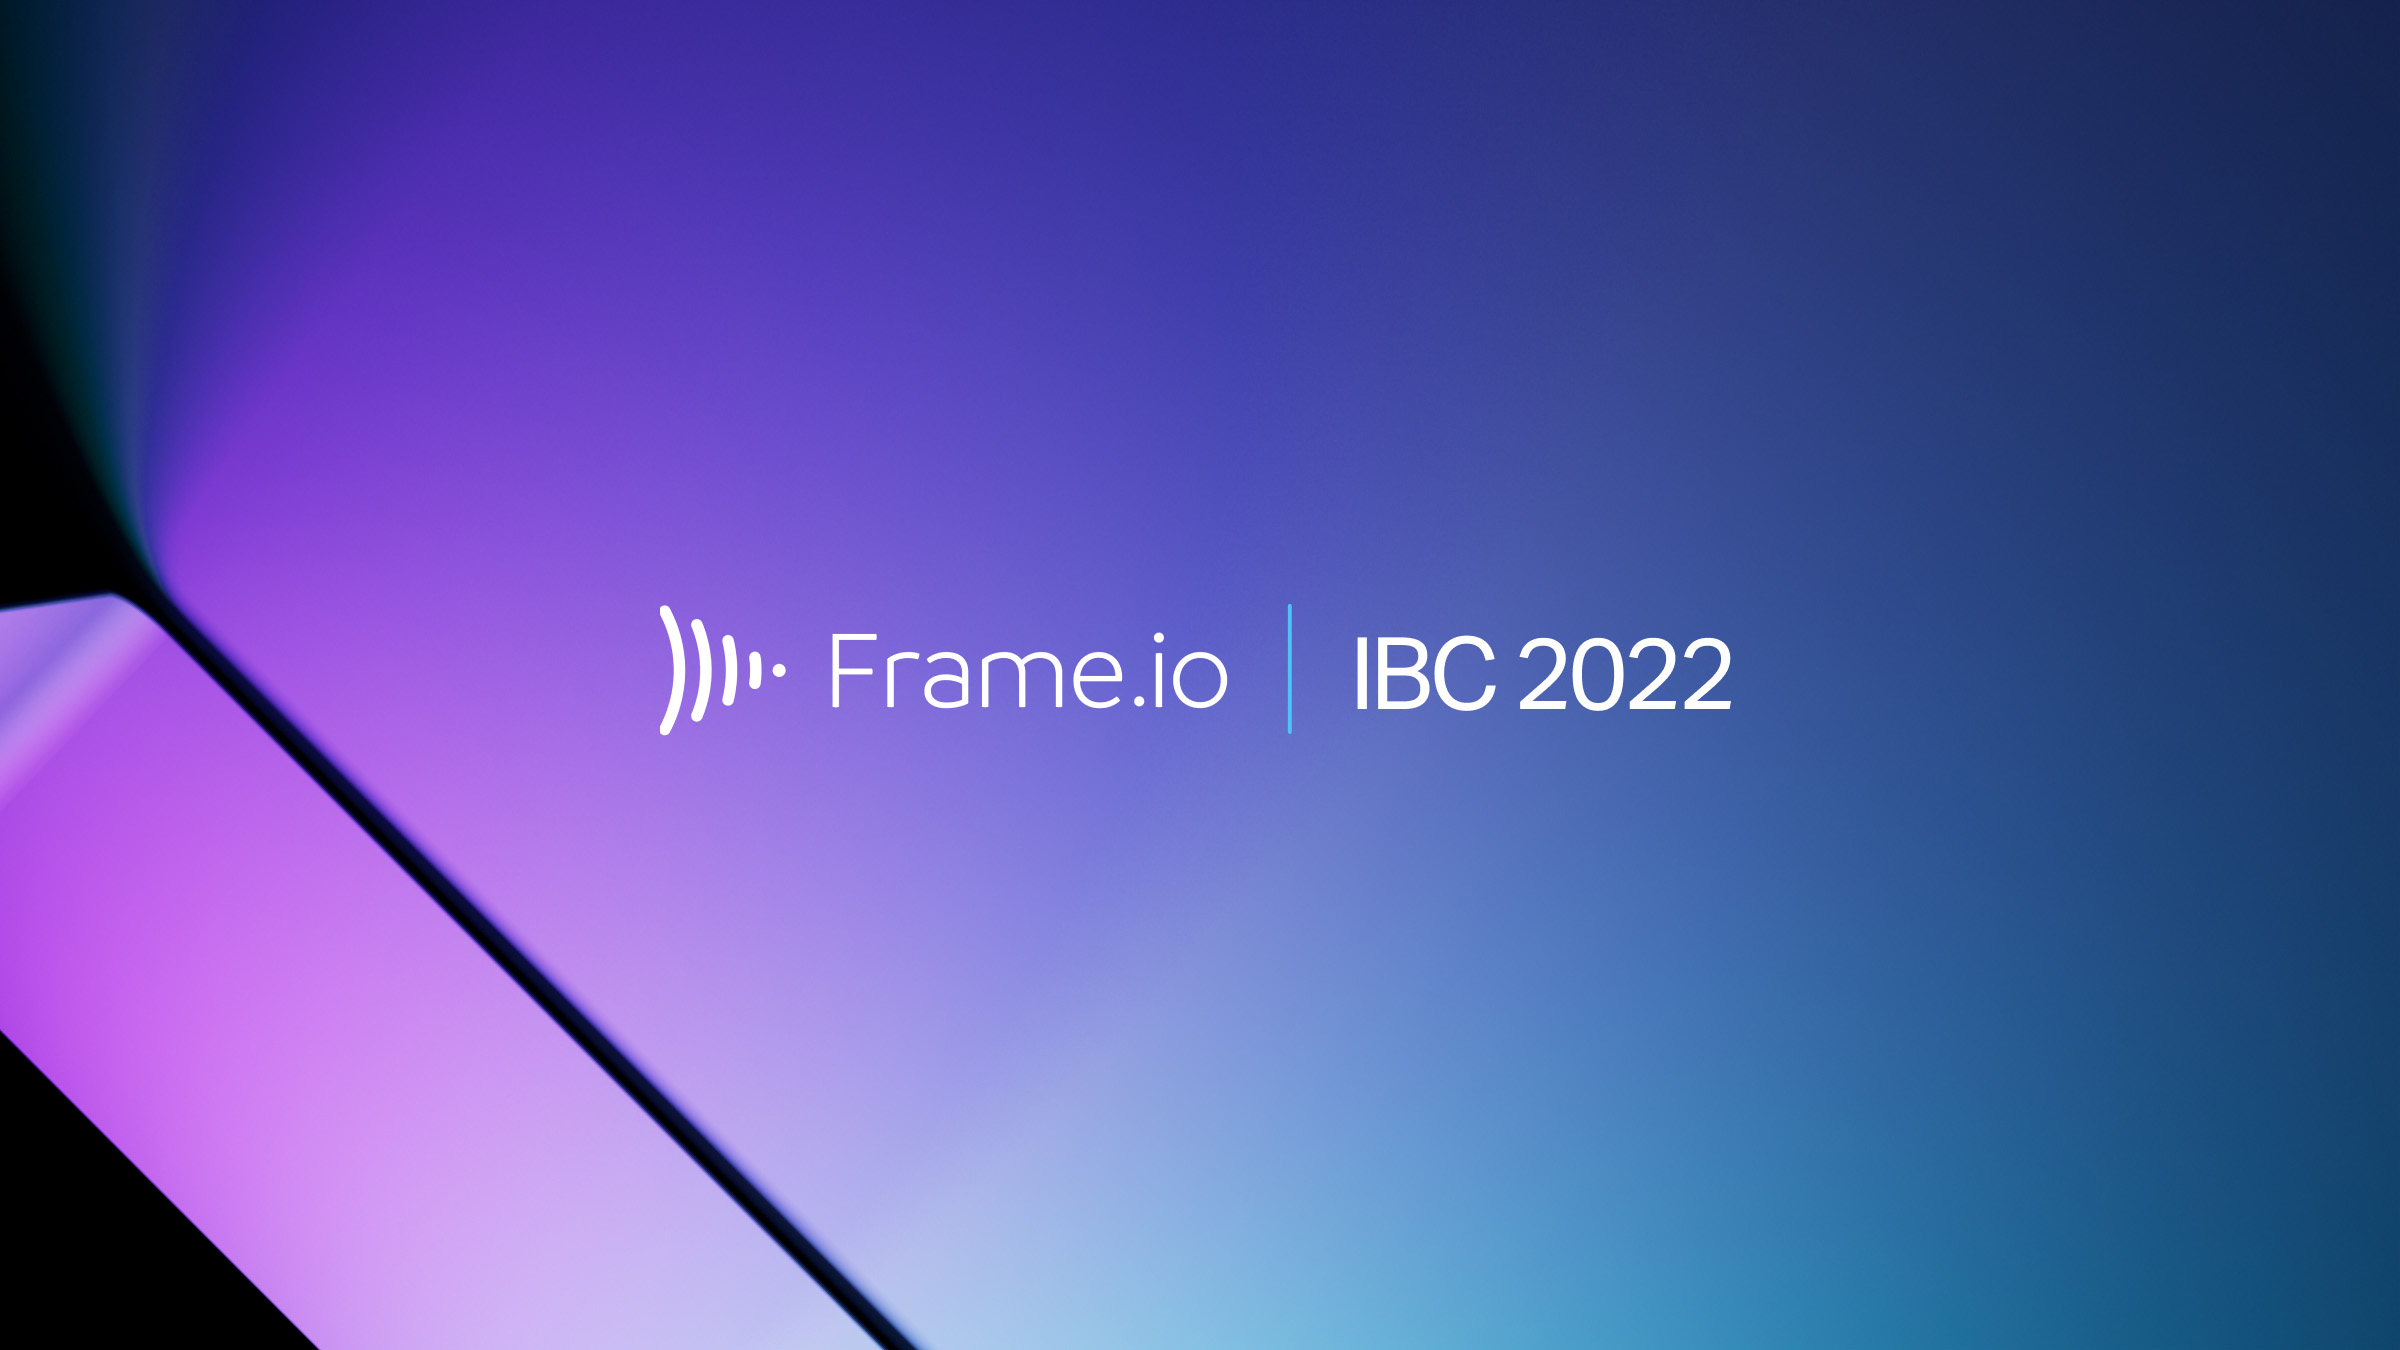 IBC2022: New Partnerships and Groundbreaking New Technology